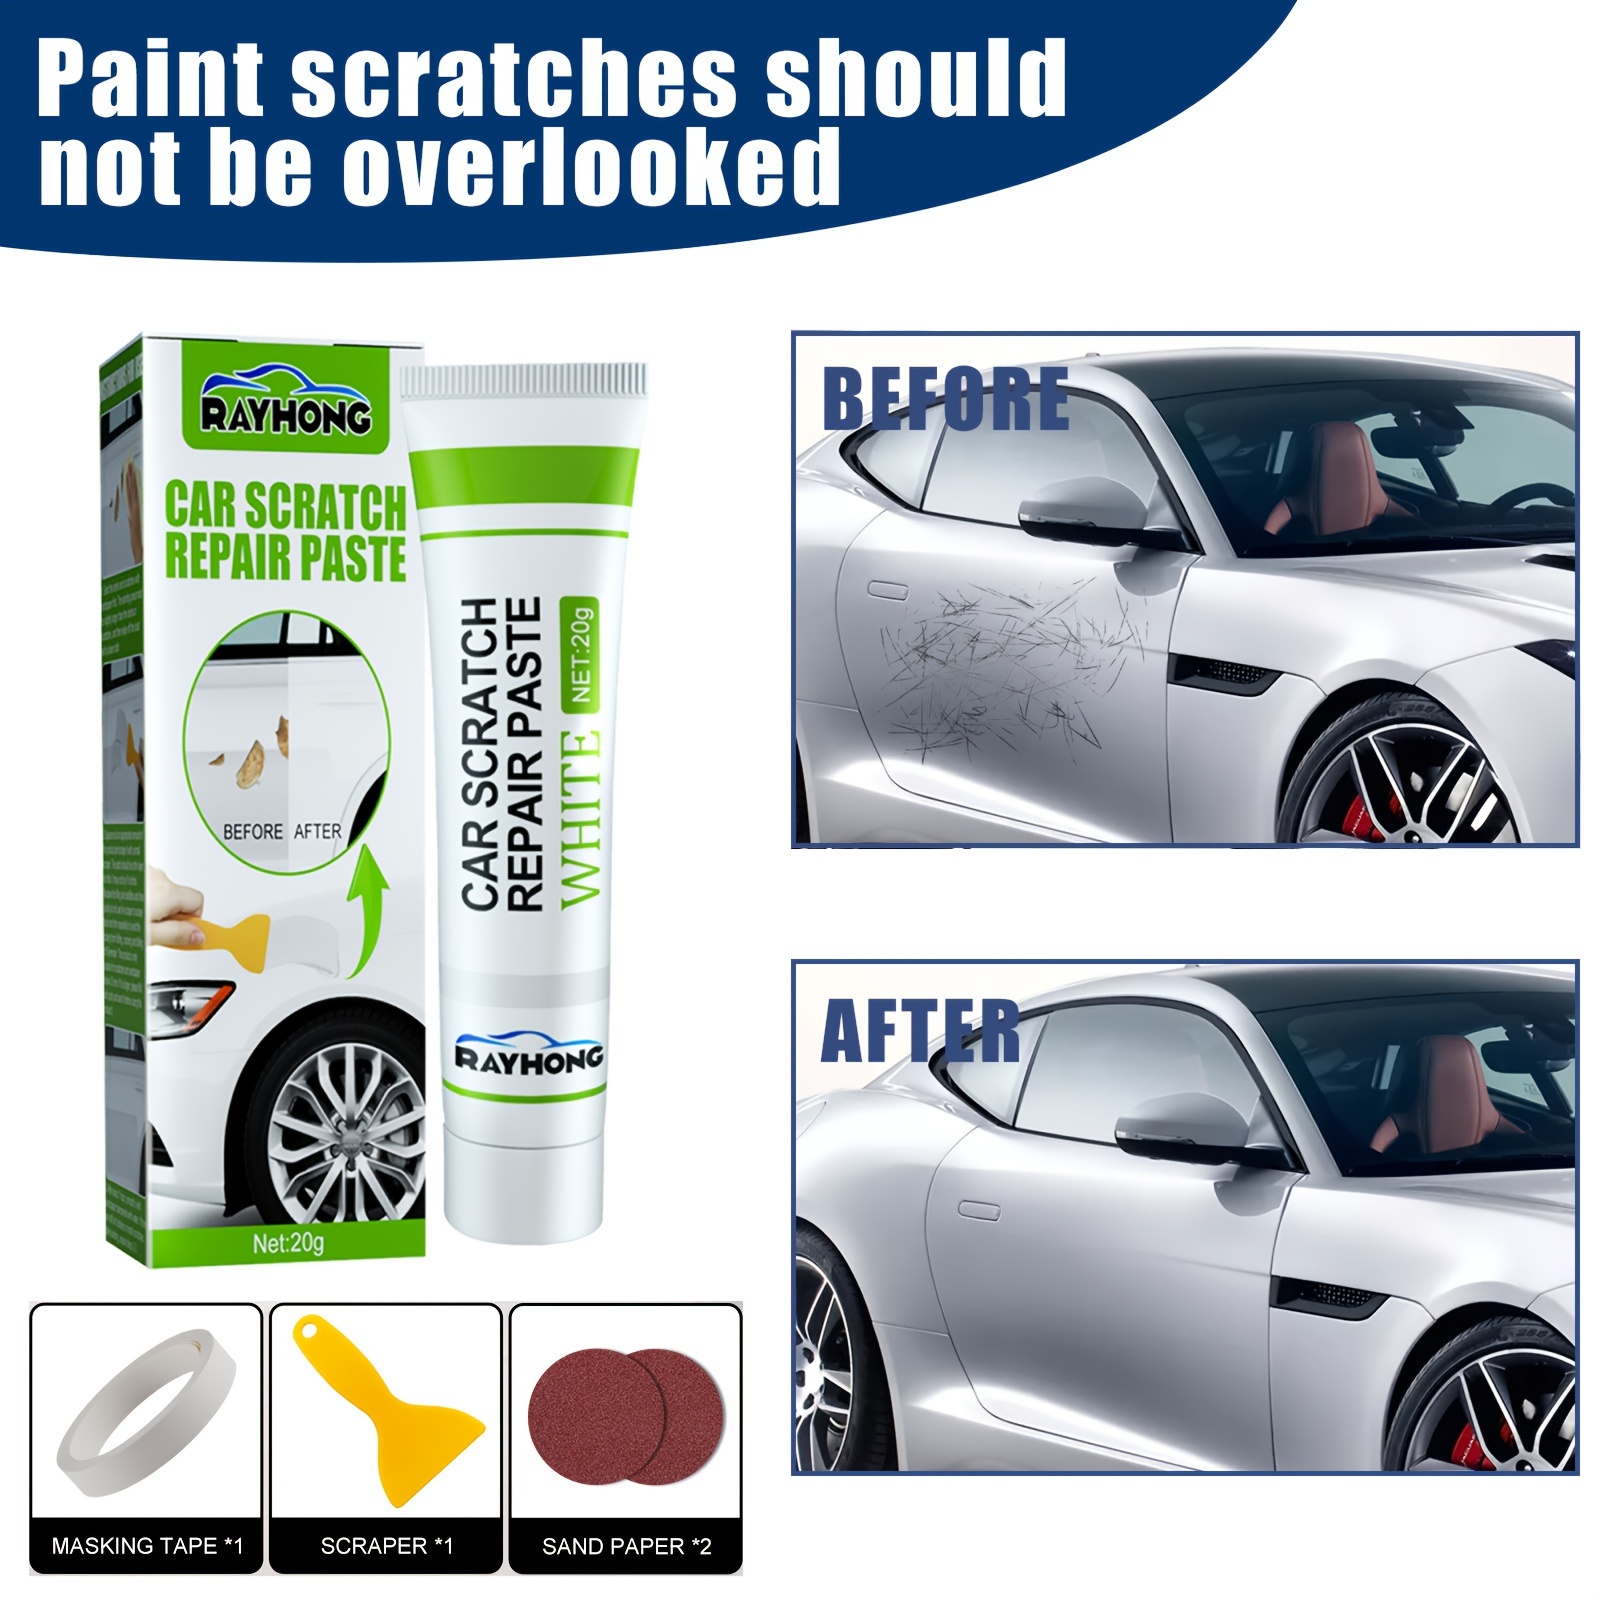 Rayhong Automotive Paint Pen Car Scratch Repair Pen Car Scratches Swirls  Removal Pen - White